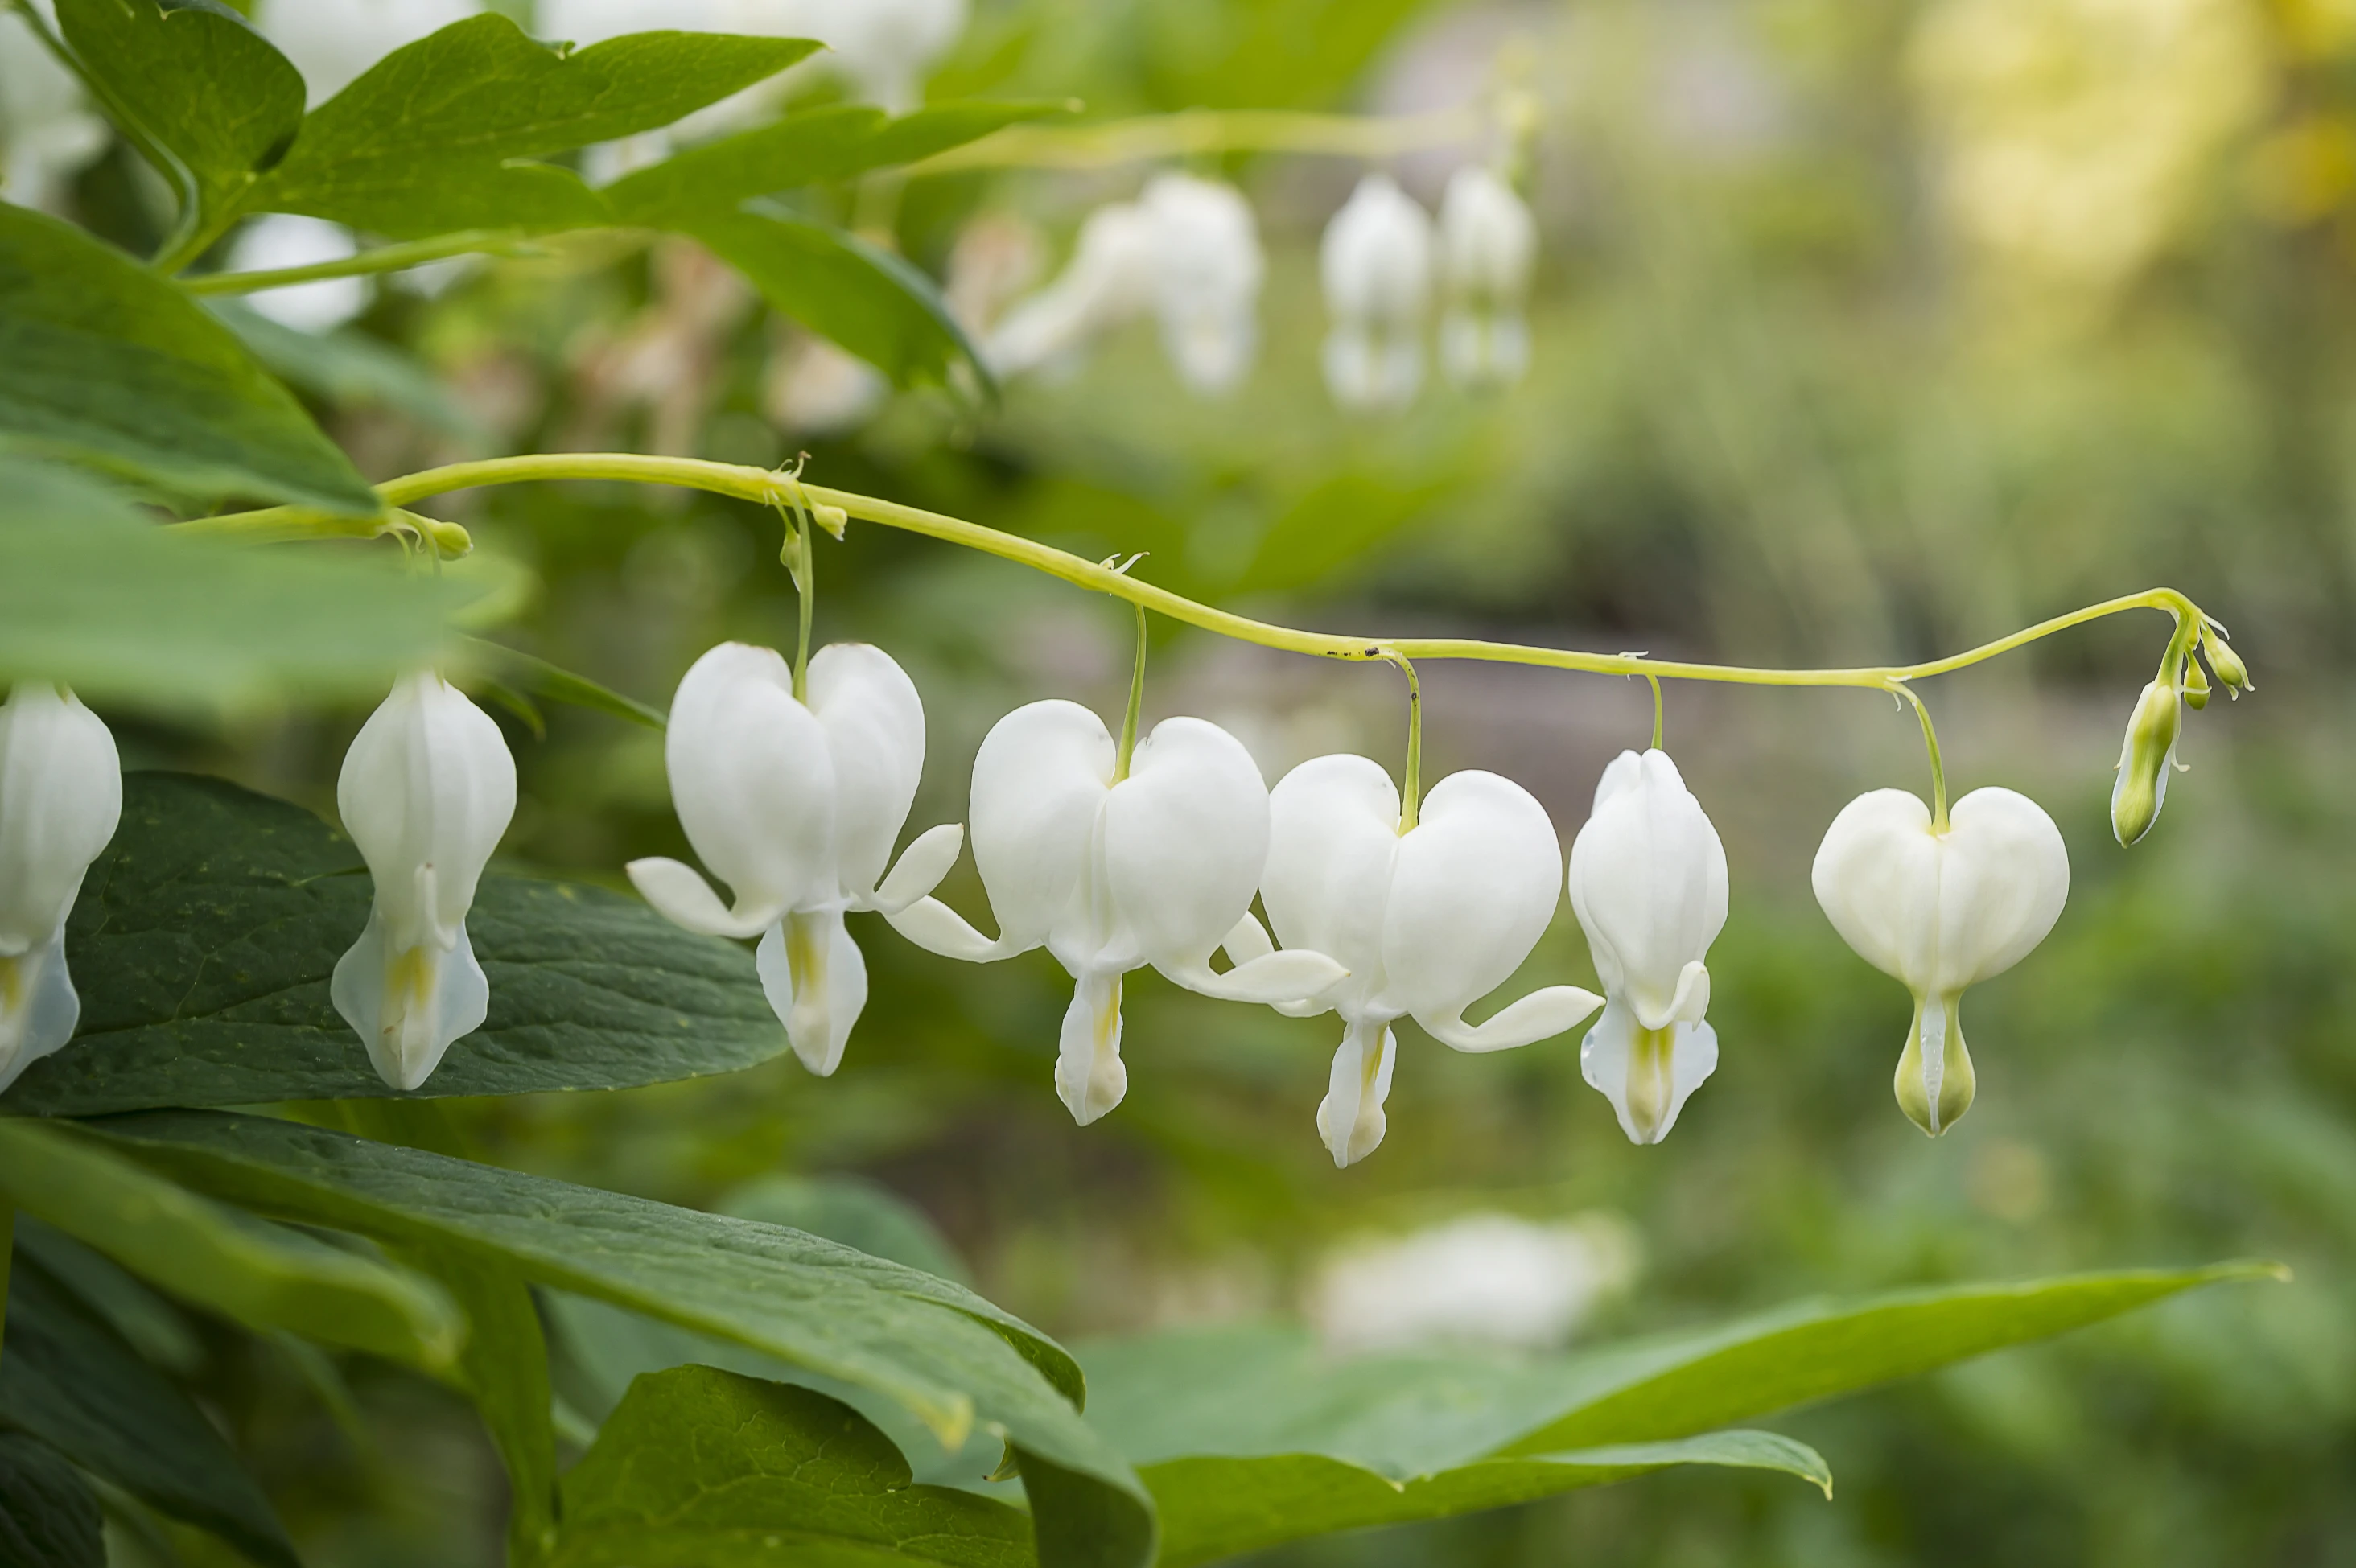 White heart shape flowers